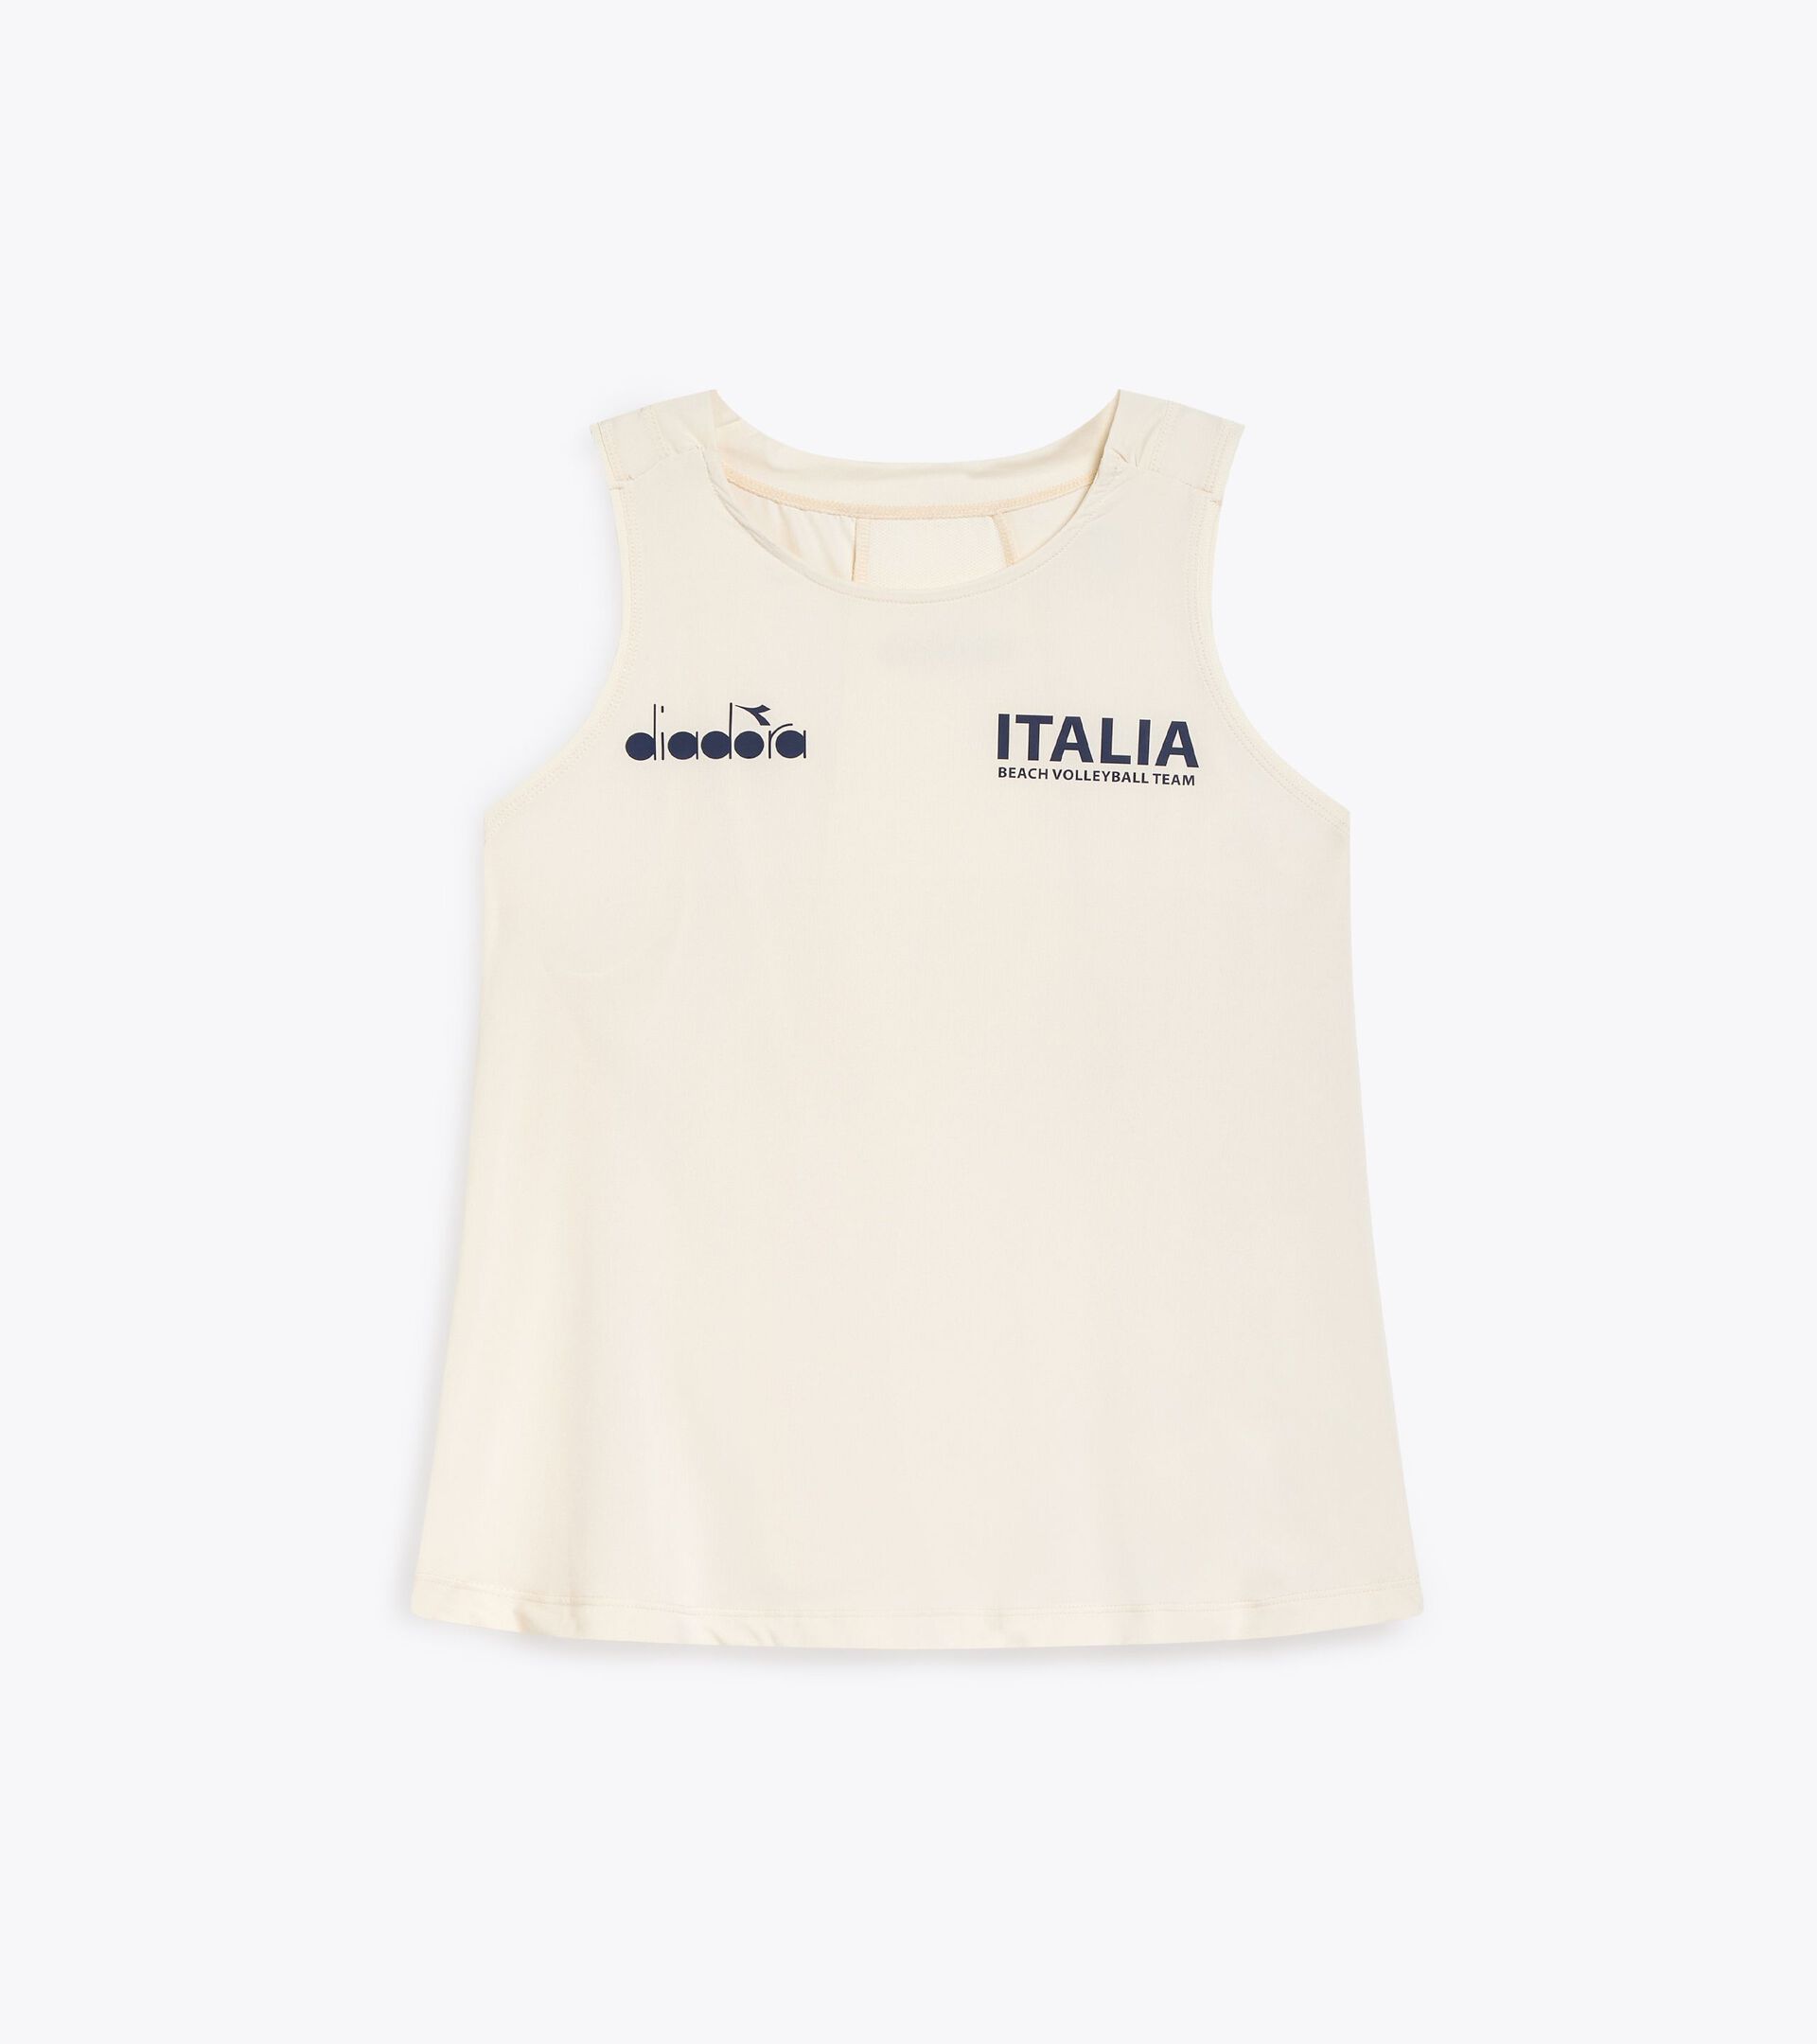 Camiseta sin mangas para mujer - Selección Italiana de Vóley Playa CANOTTA ALLENAMENTO DONNA BV24 ITALIA BLANCO MURMURAR - Diadora